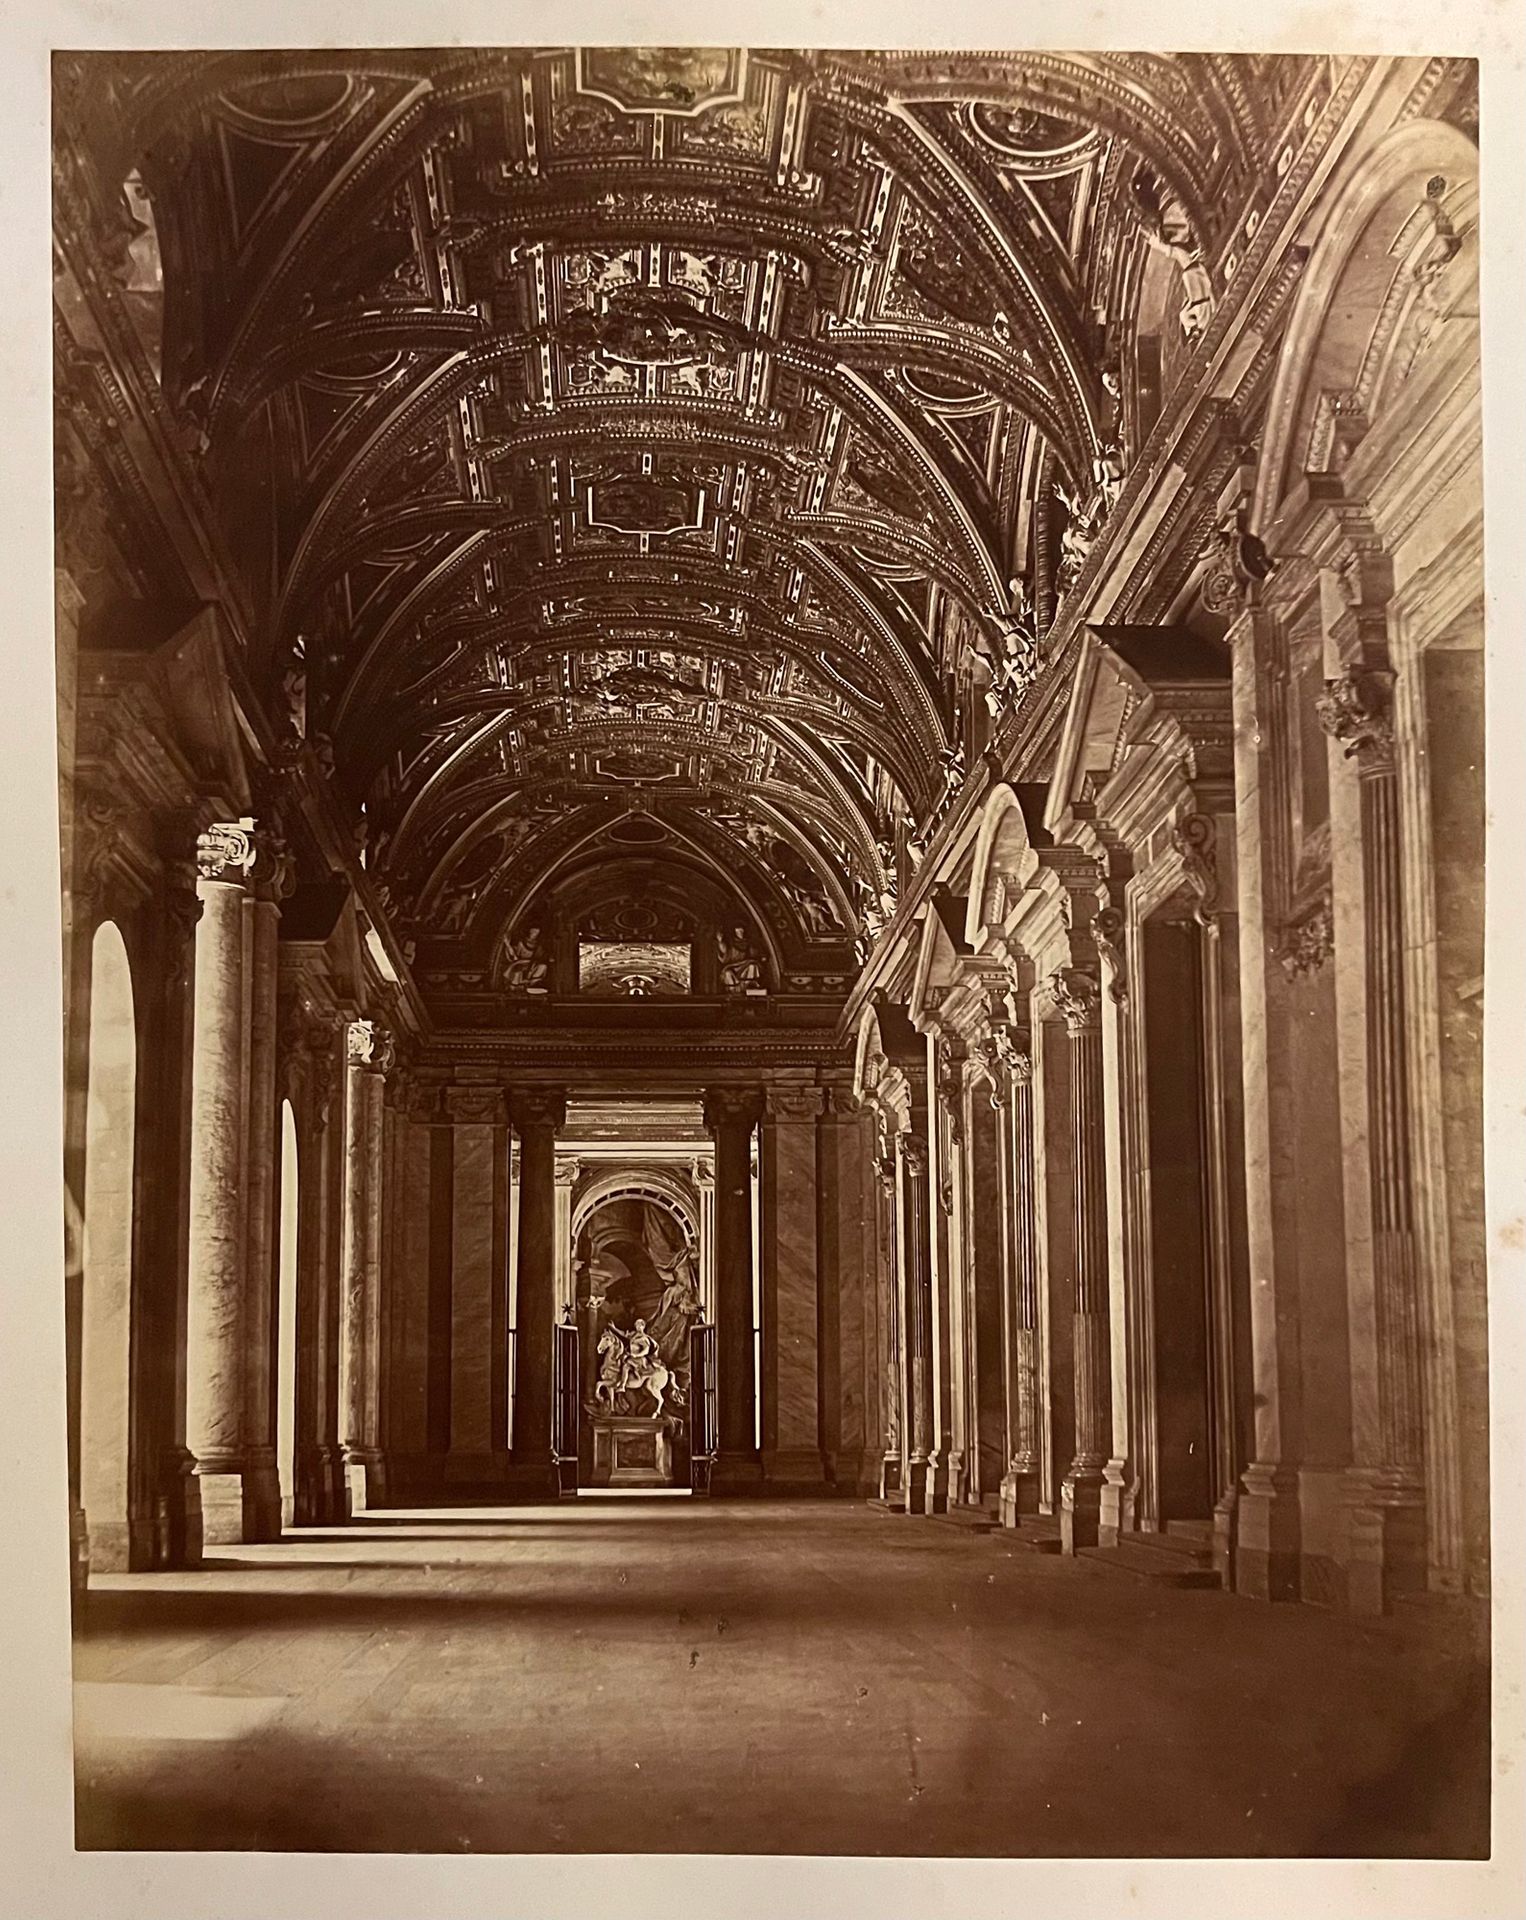 James Anderson (1813-1877) 梵蒂冈城的圣彼得穹顶前庭，1850年代，盐纸印刷品，有令人愉快的金色调，300x380毫米，对比强烈。